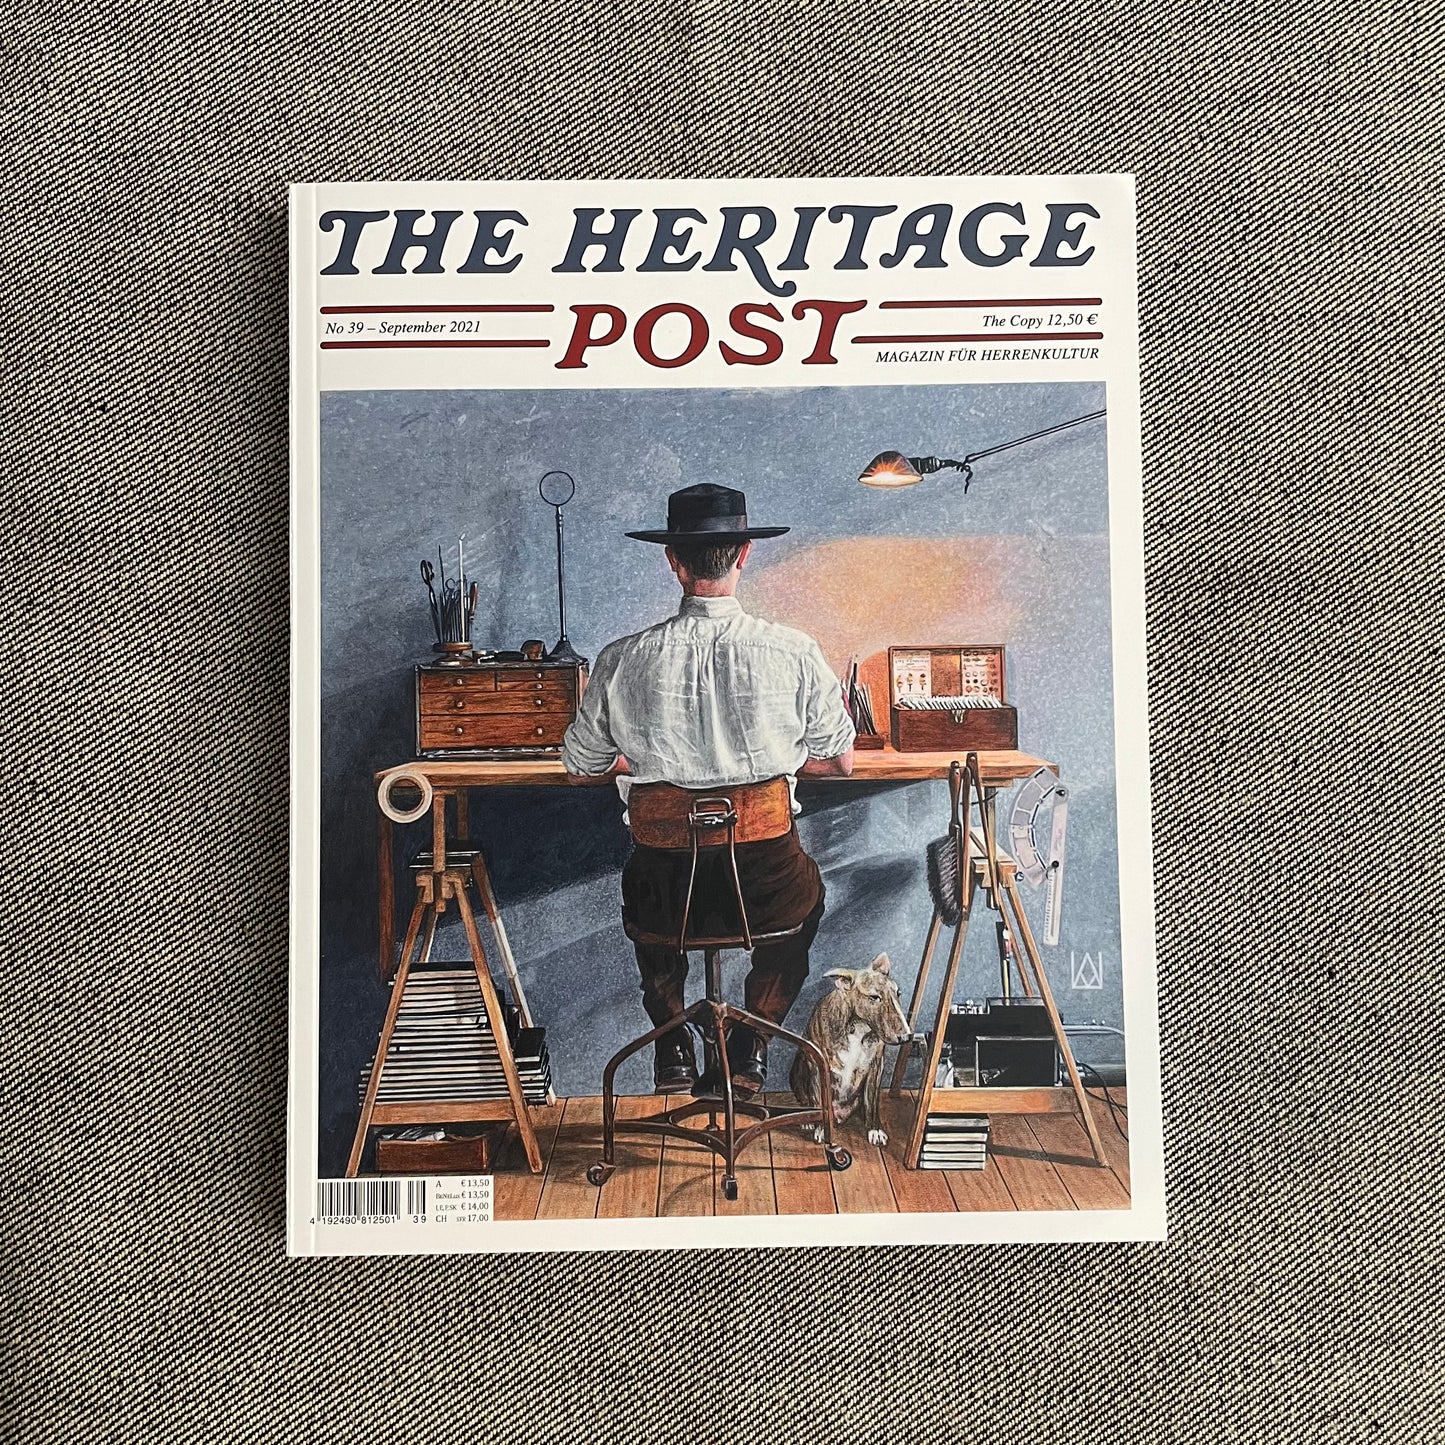 The Heritage Post - vol 39